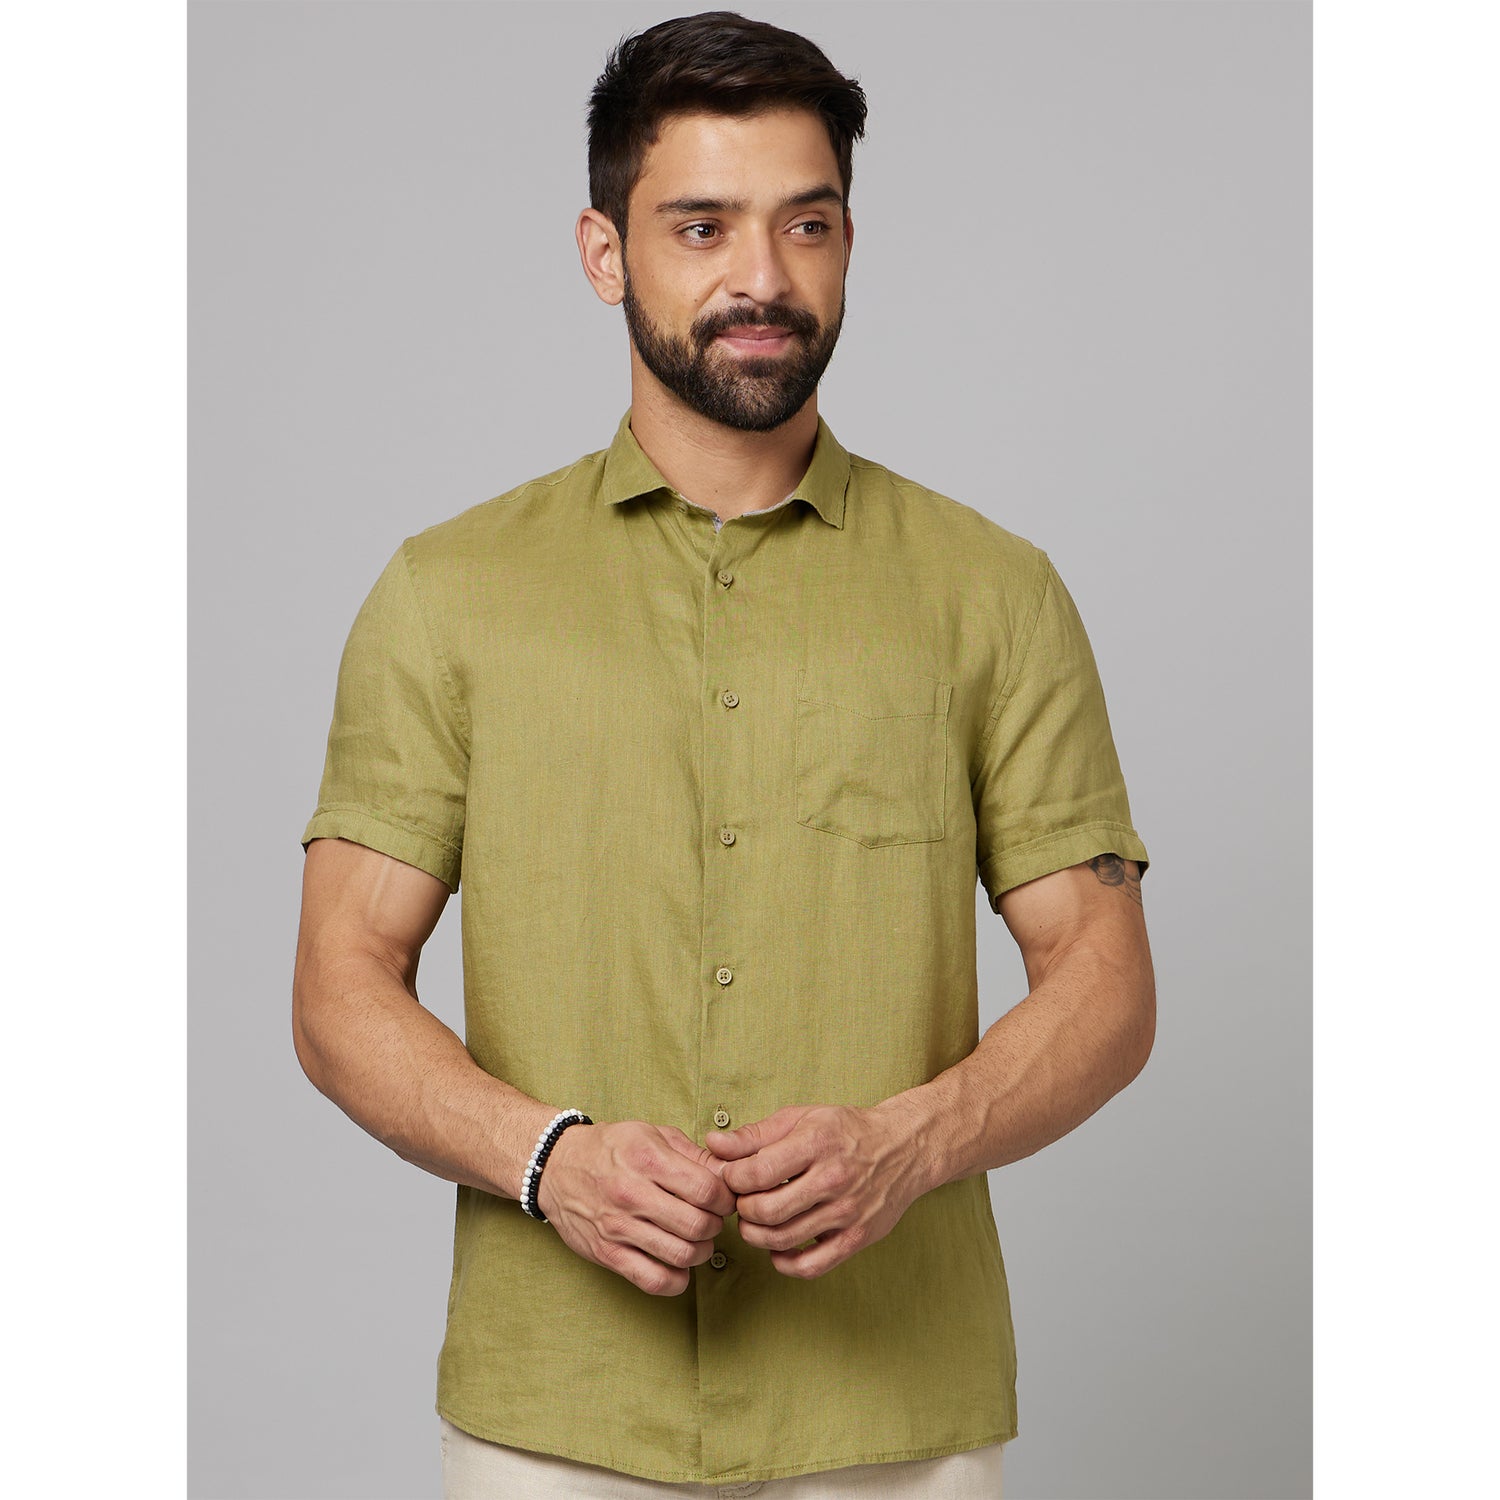 Green Classic Short Sleeves Linen Casual Shirt (DACARAIN)